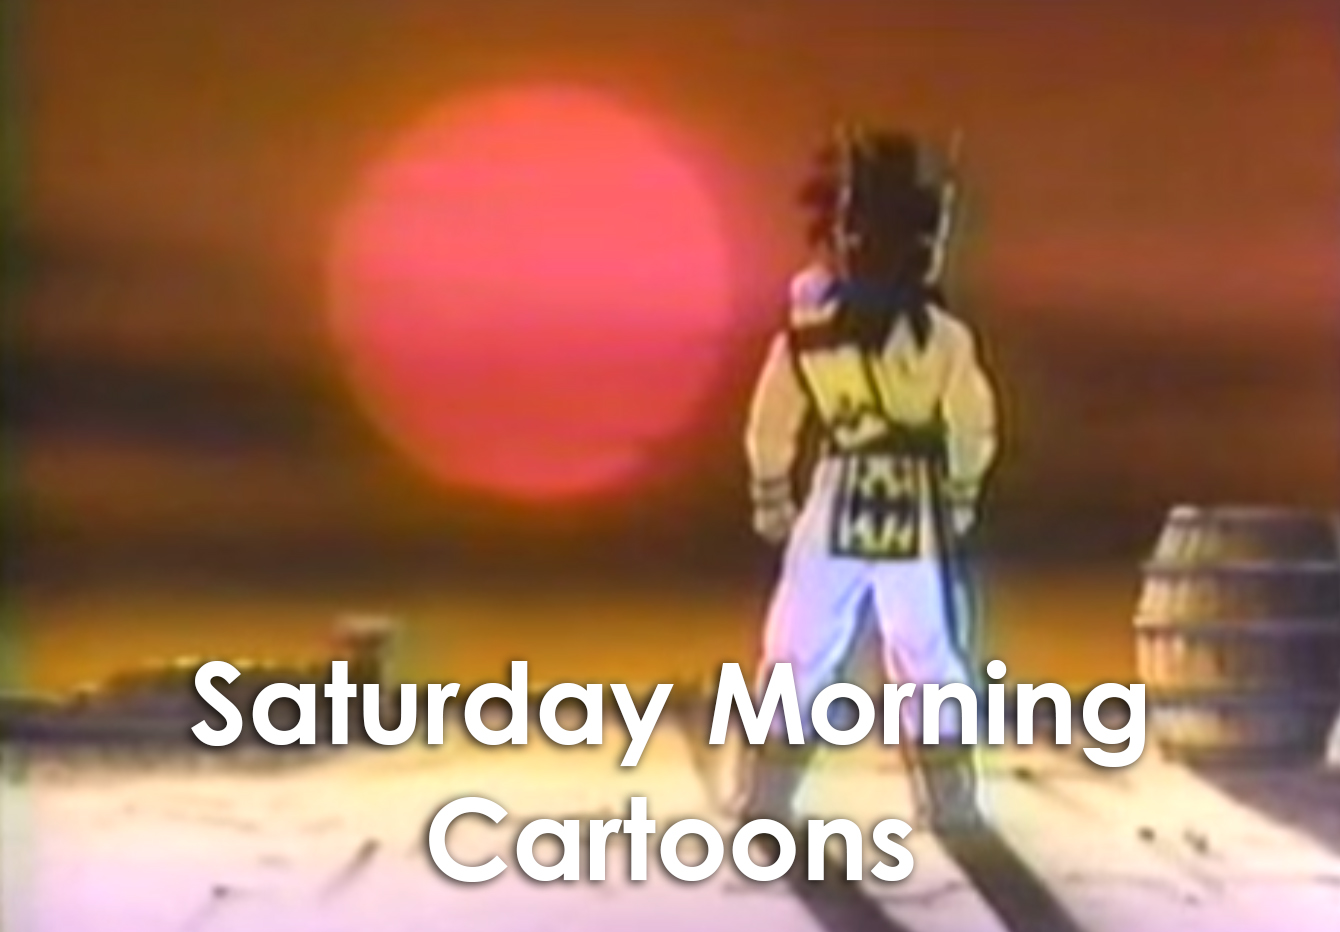 Saturday Morning Cartoons: Watch Dragon Warrior – Season 1 episodes 1-7